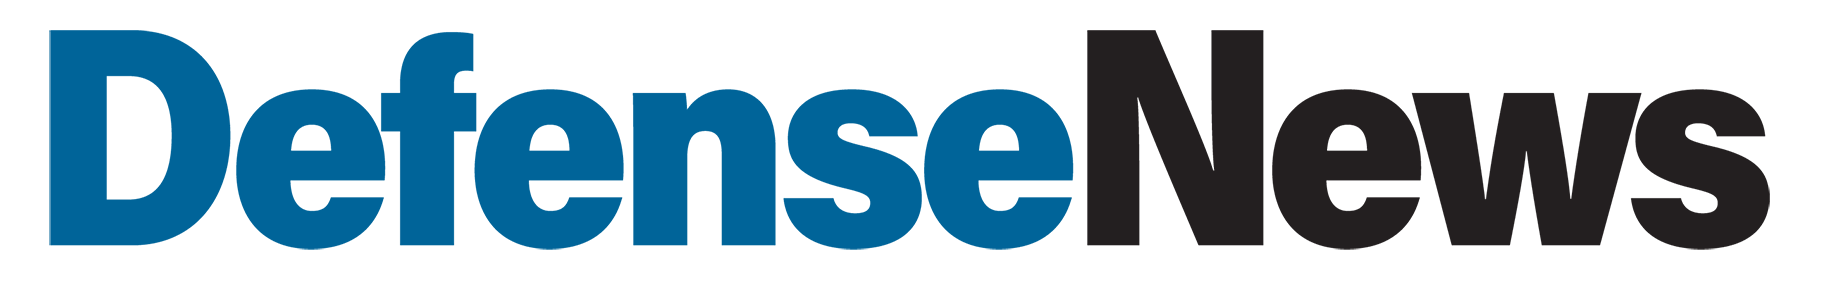 defensenews-logo.png